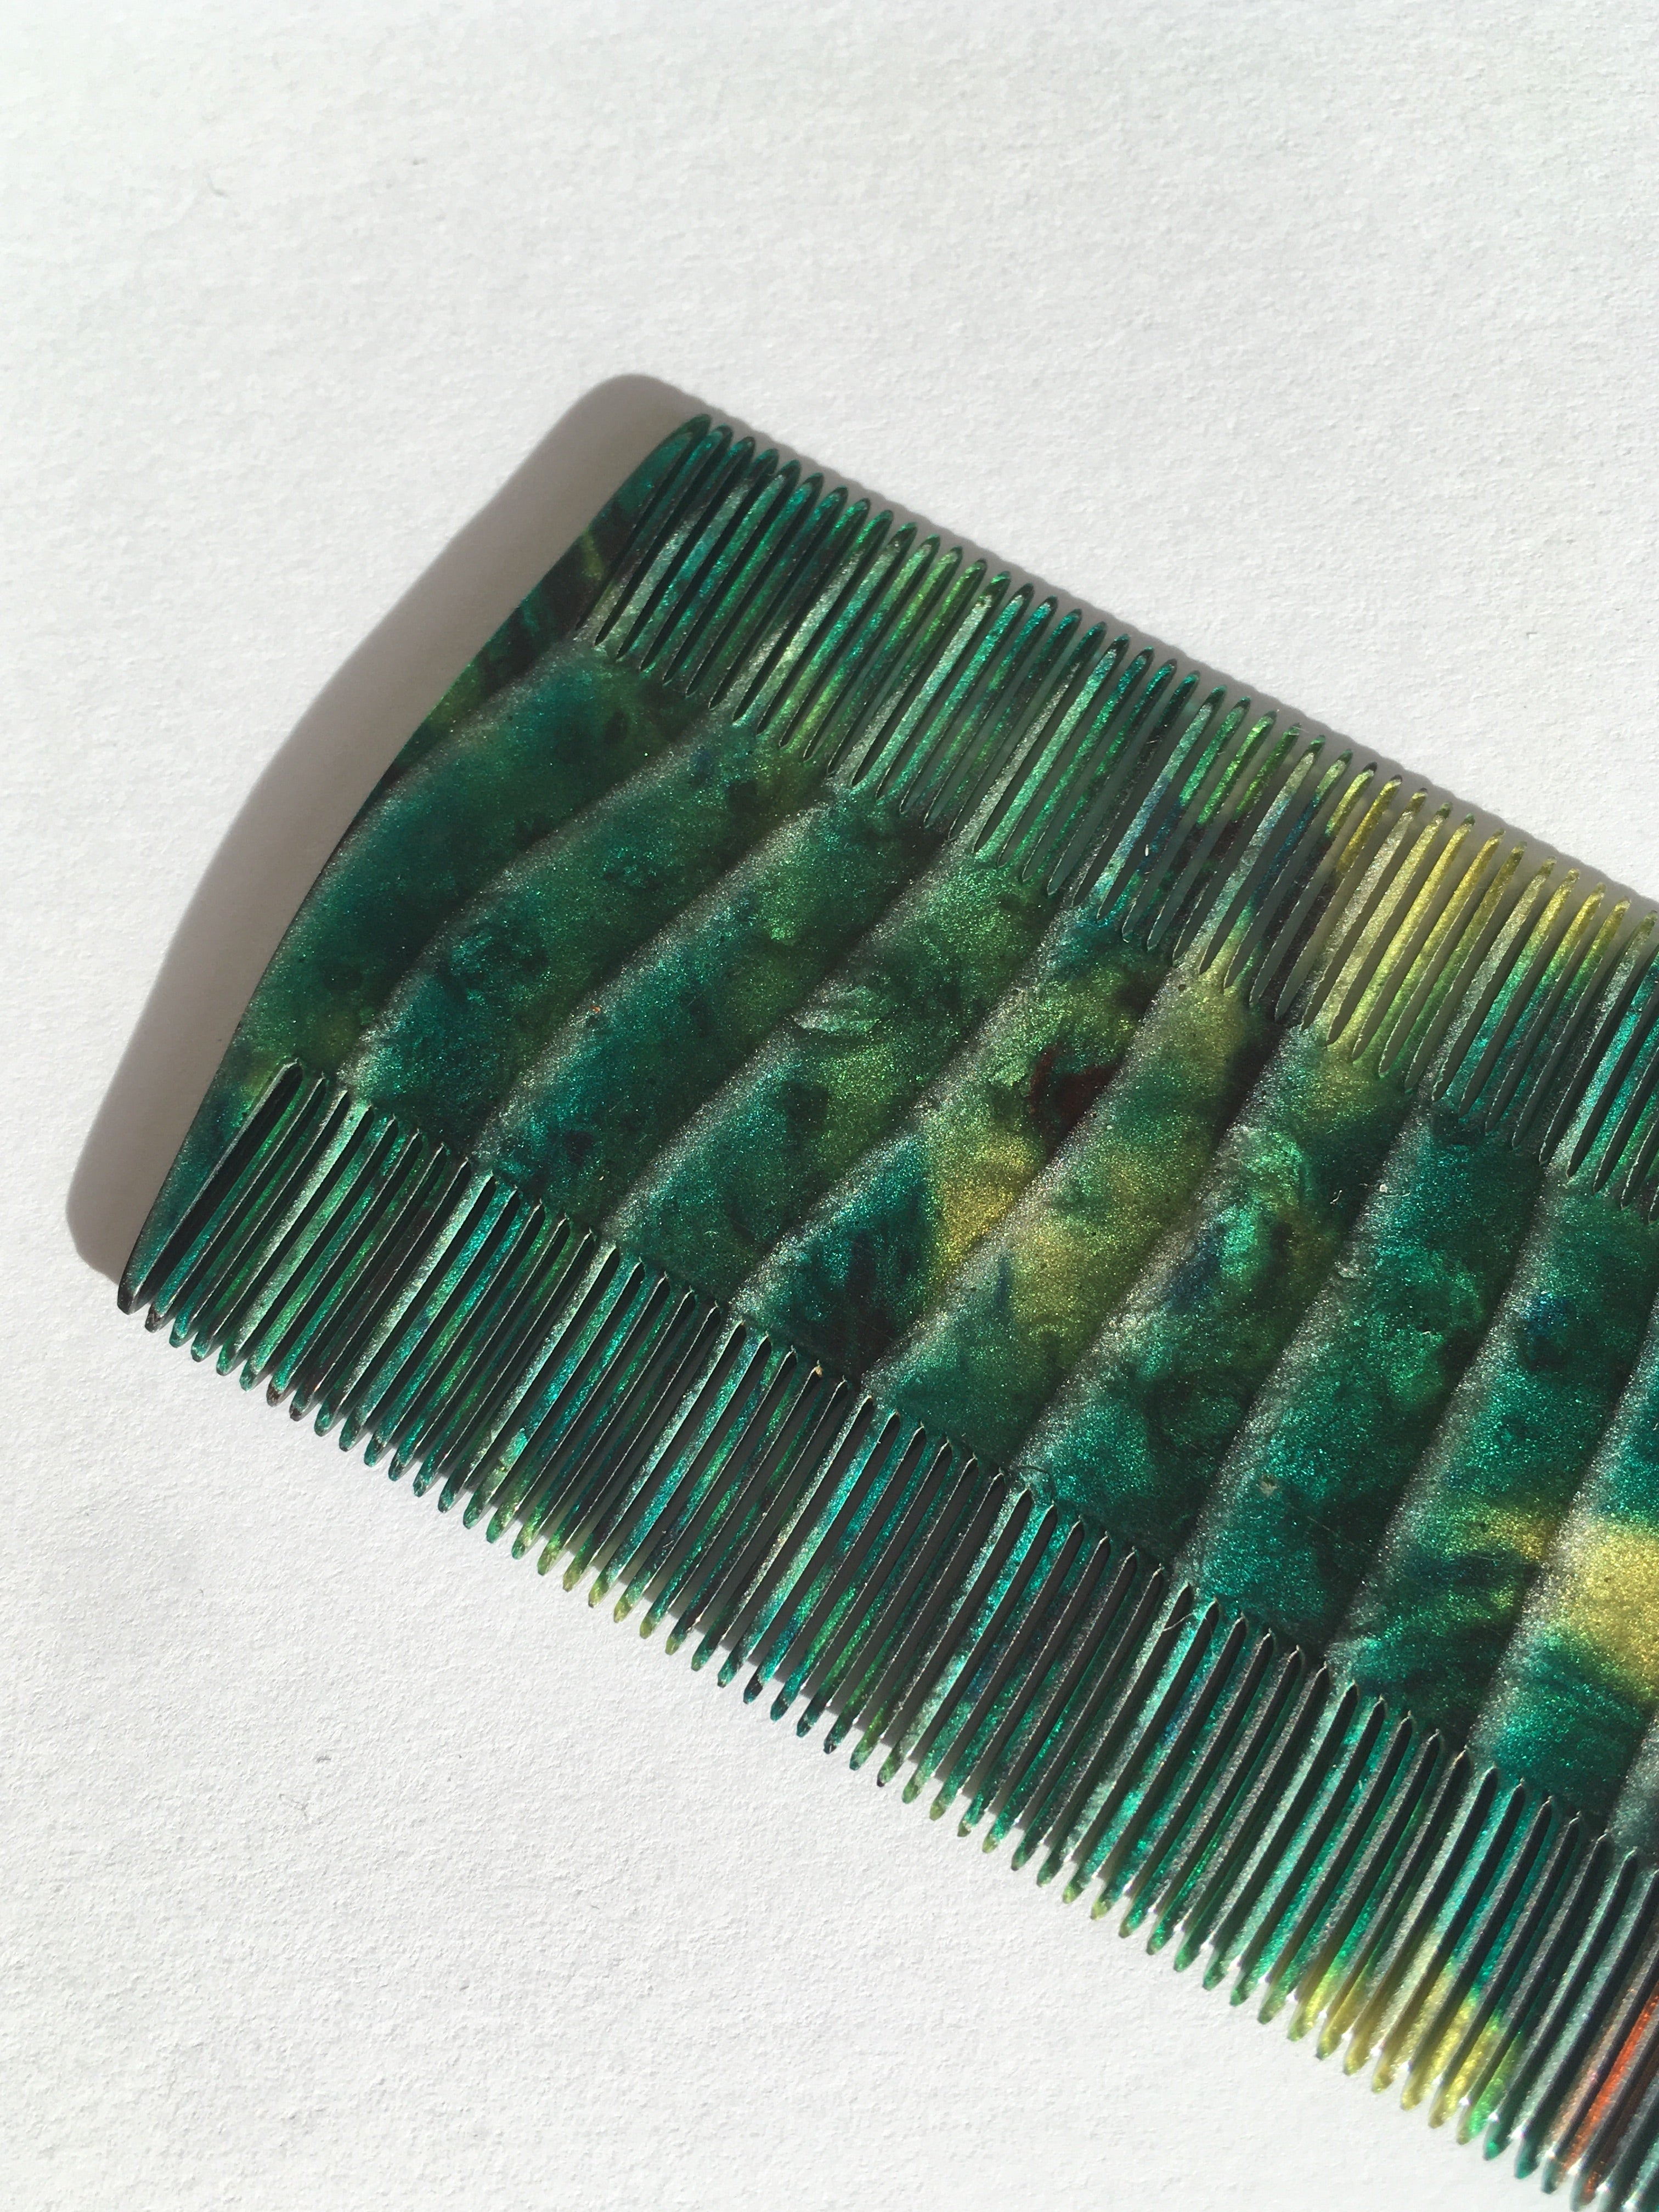 Vintage lice comb - Reptile